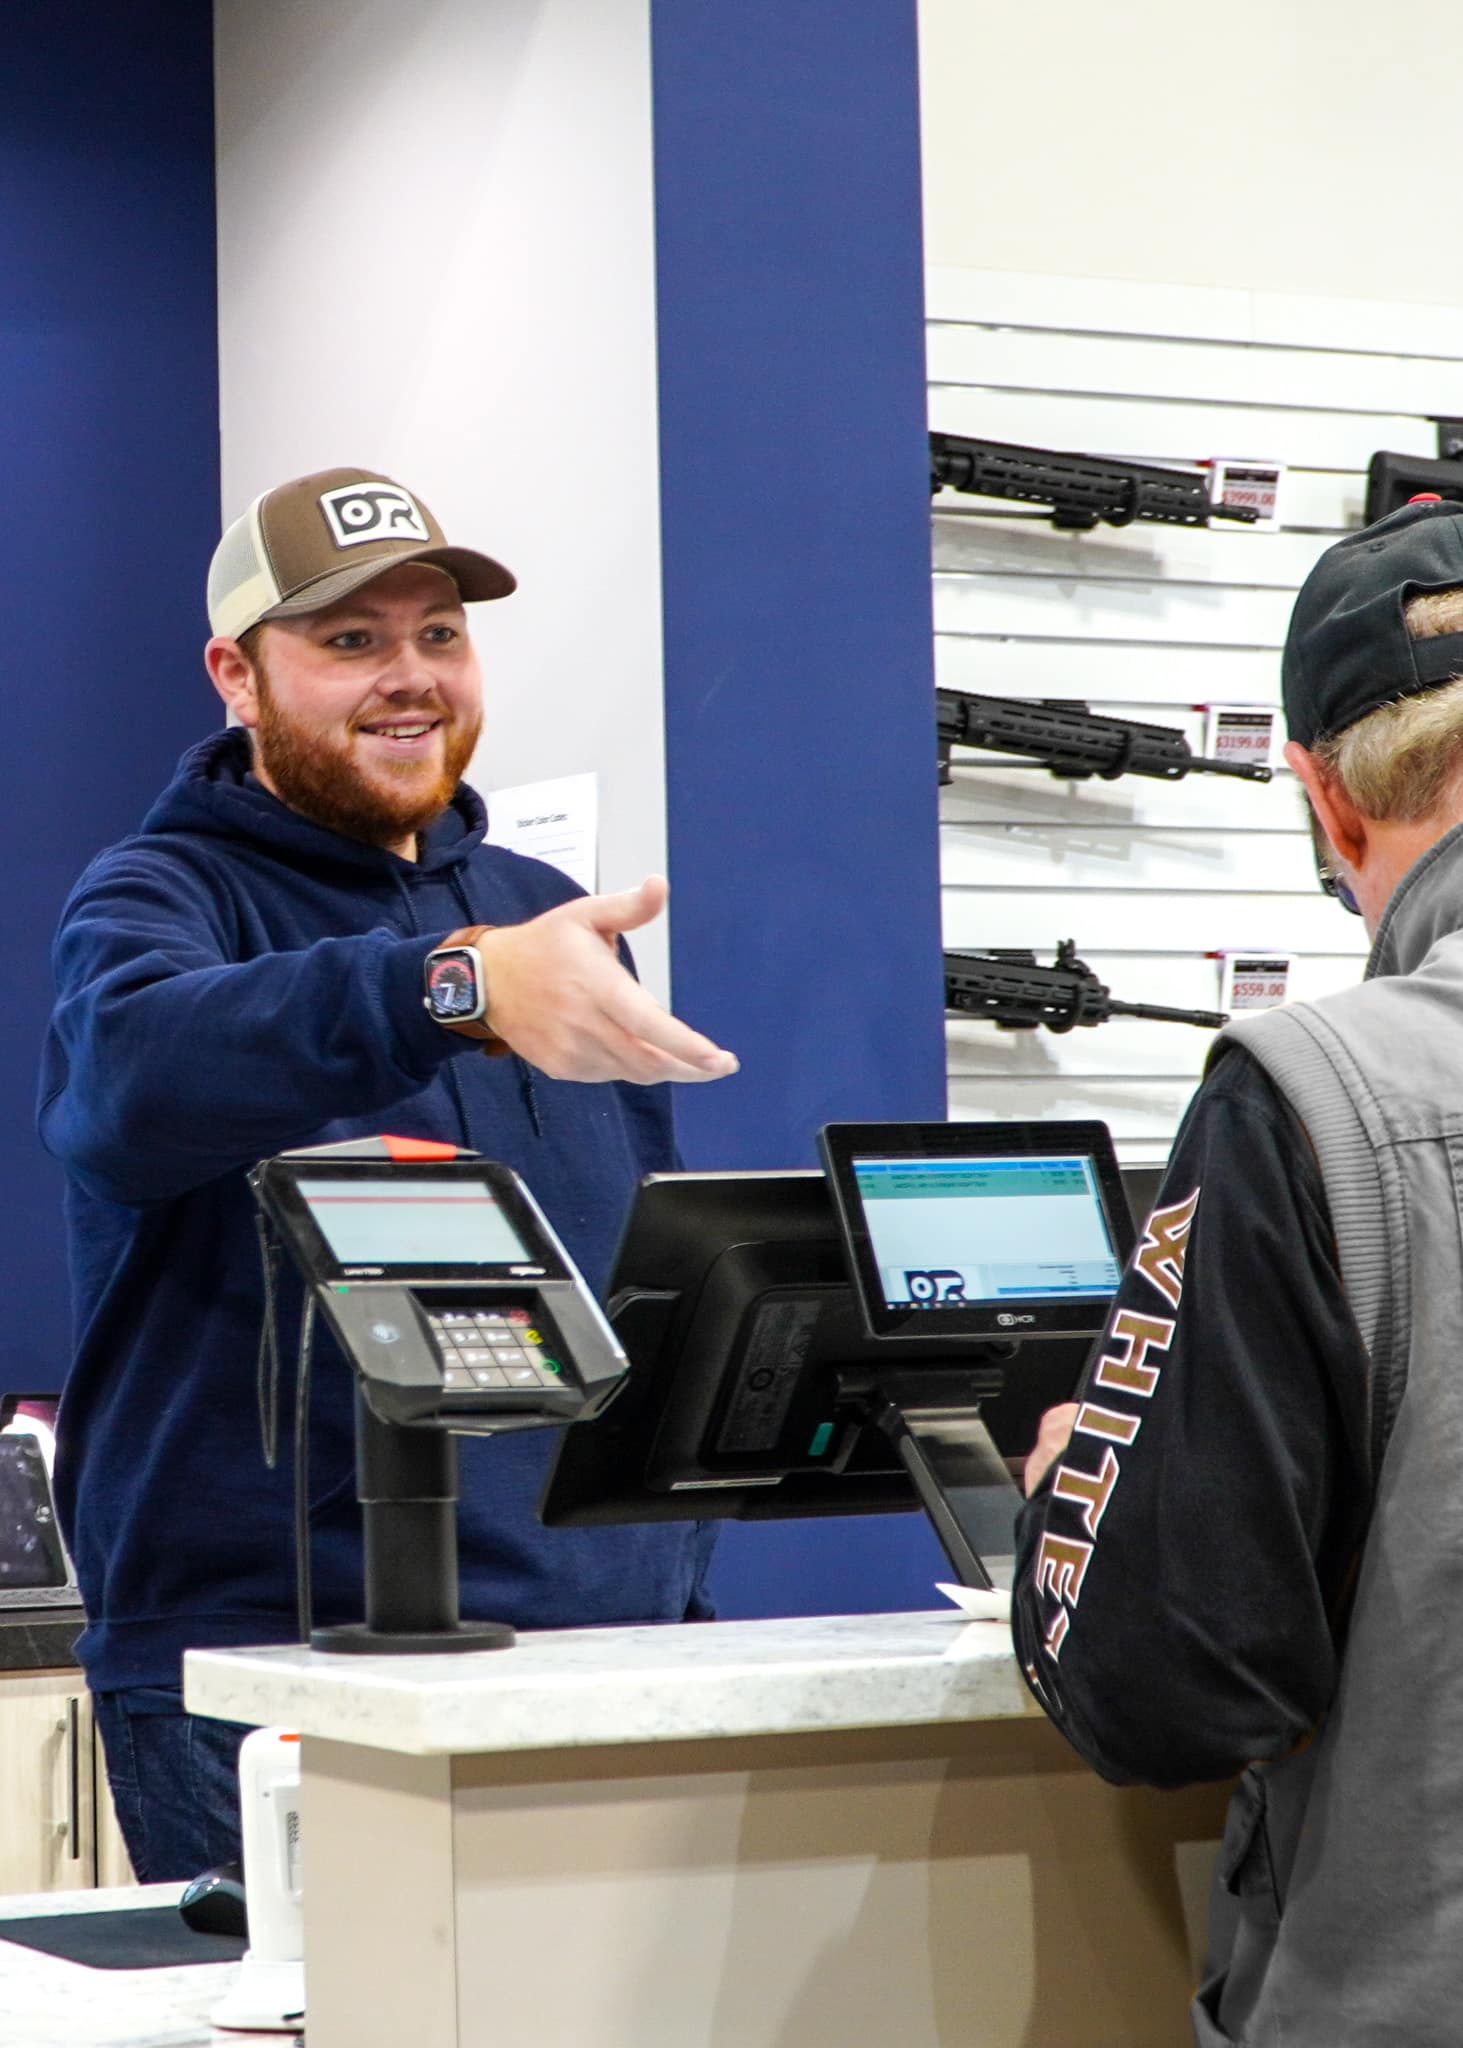 Down Range Guns & Ammo Owner helping a customer